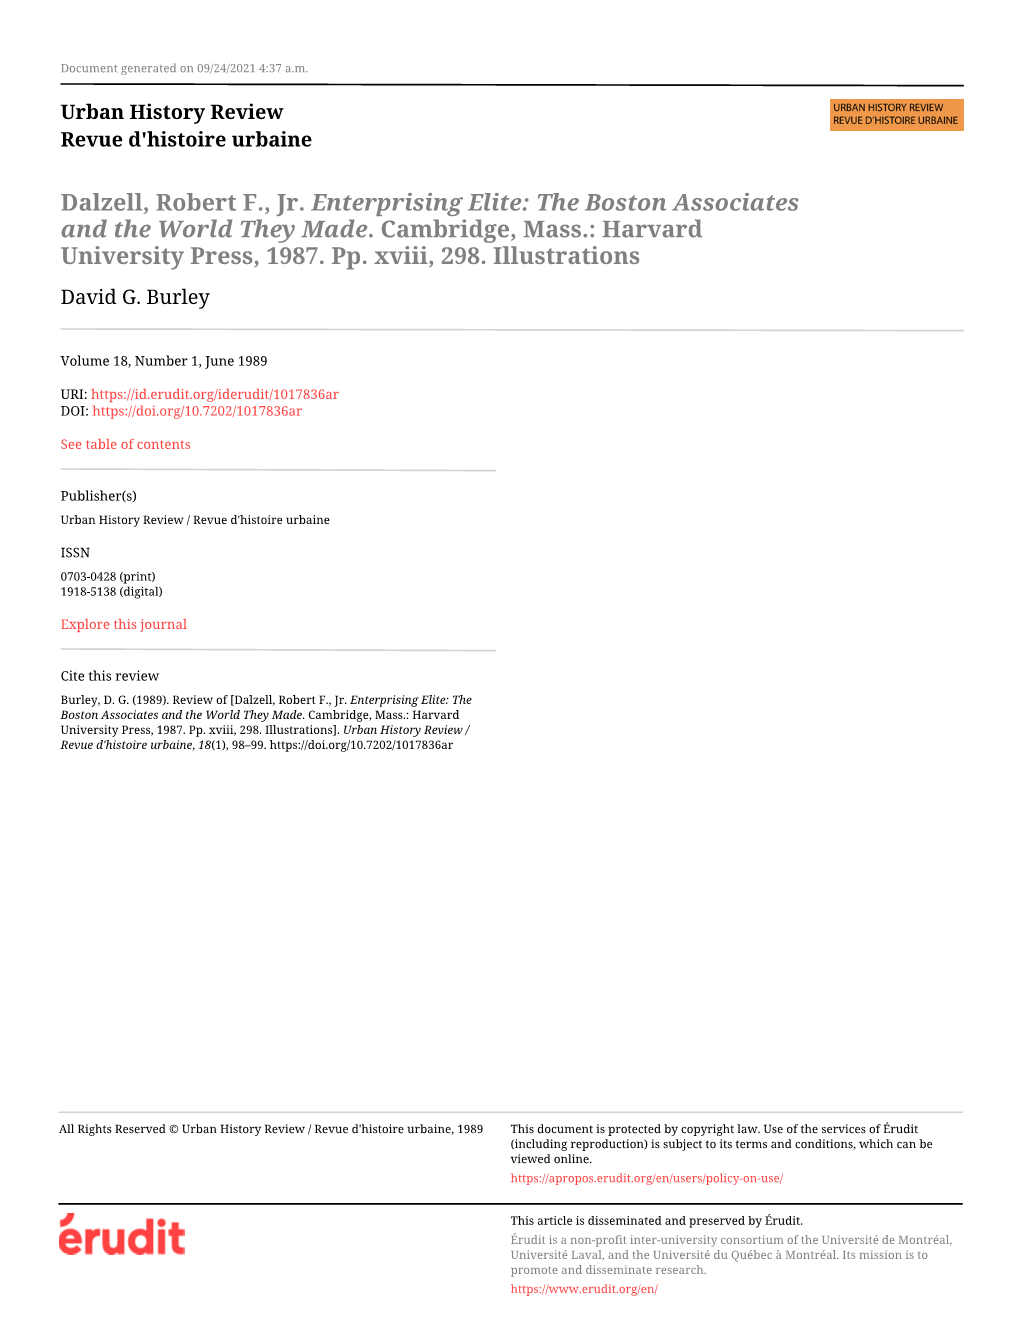 Dalzell, Robert F., Jr. Enterprising Elite: the Boston Associates and the World They Made